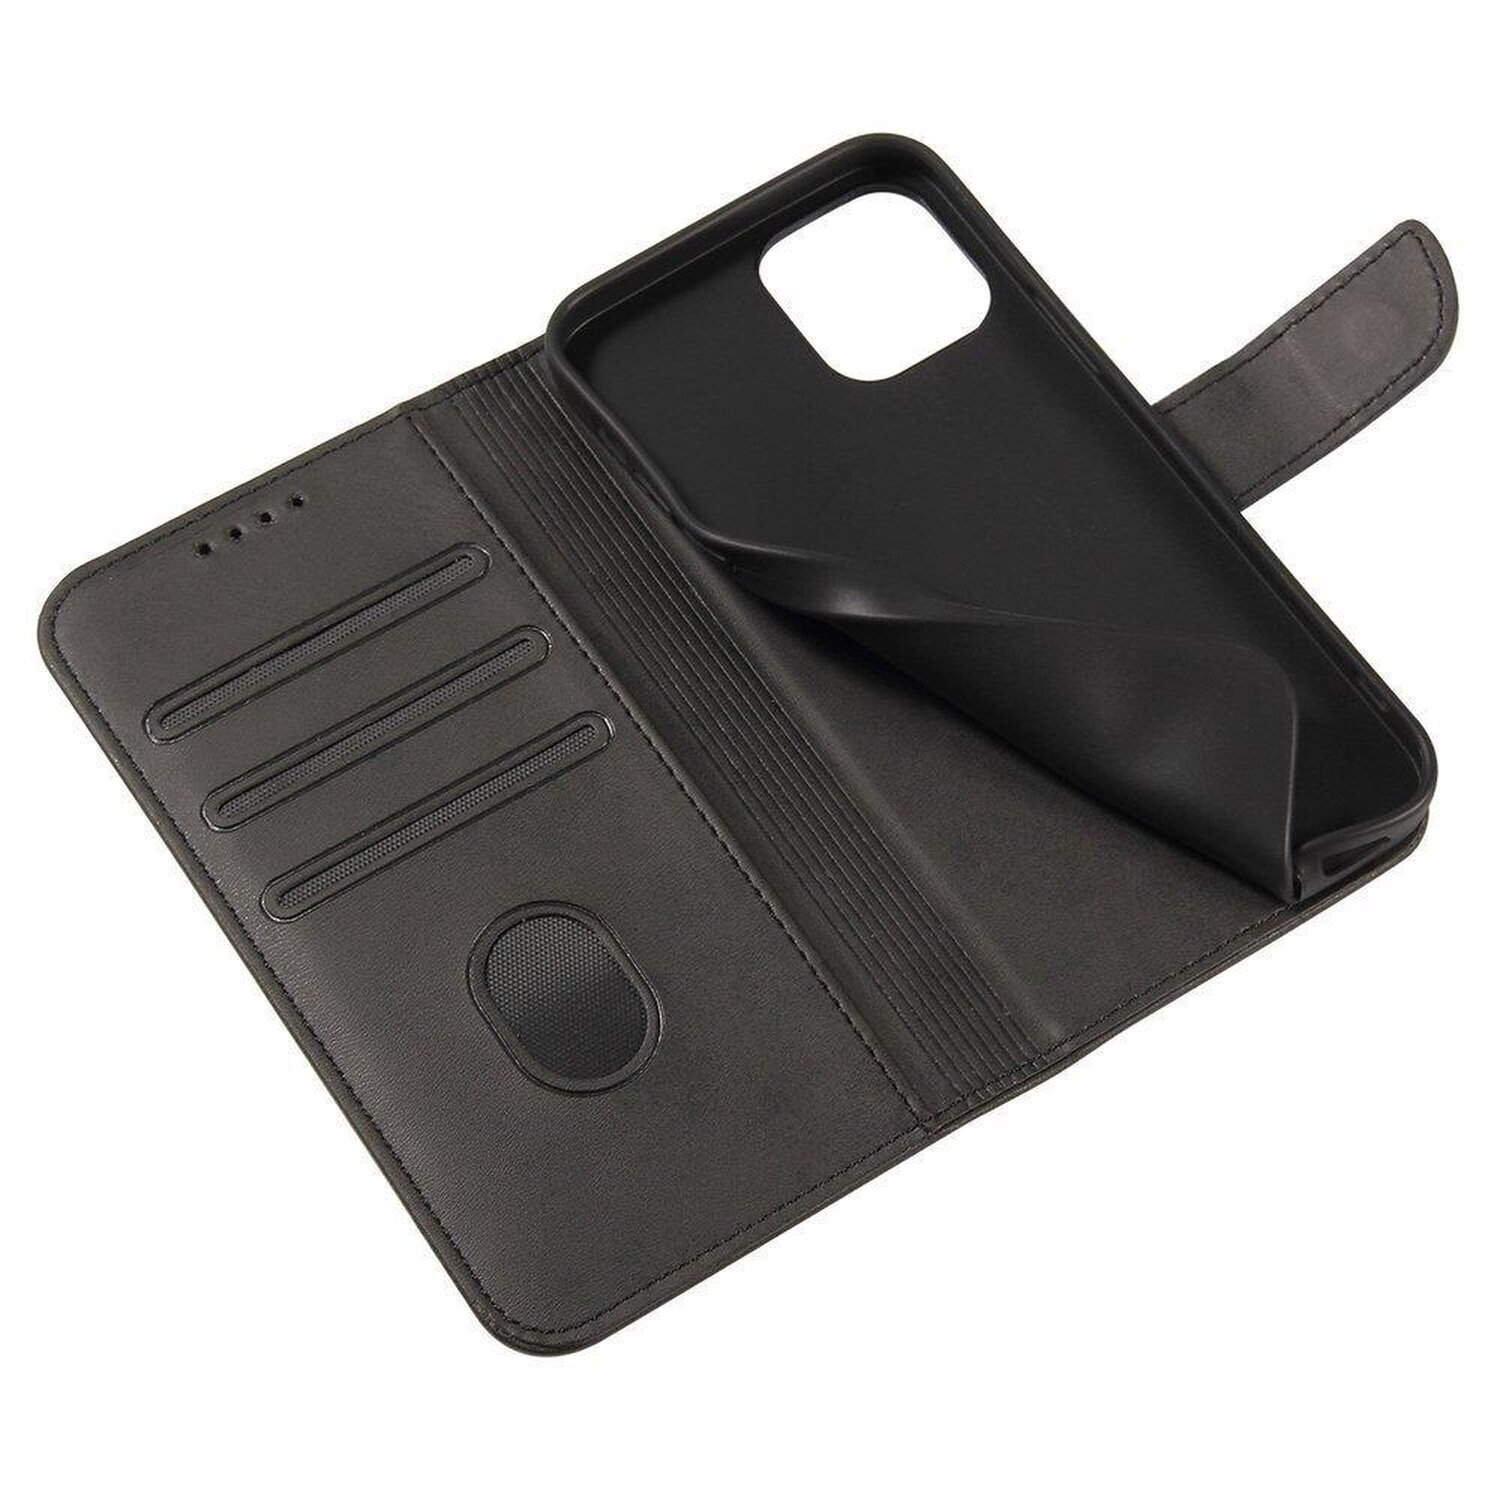 COFI Magnet Case, Bookcover, Galaxy S21 Schwarz Ultra, Samsung